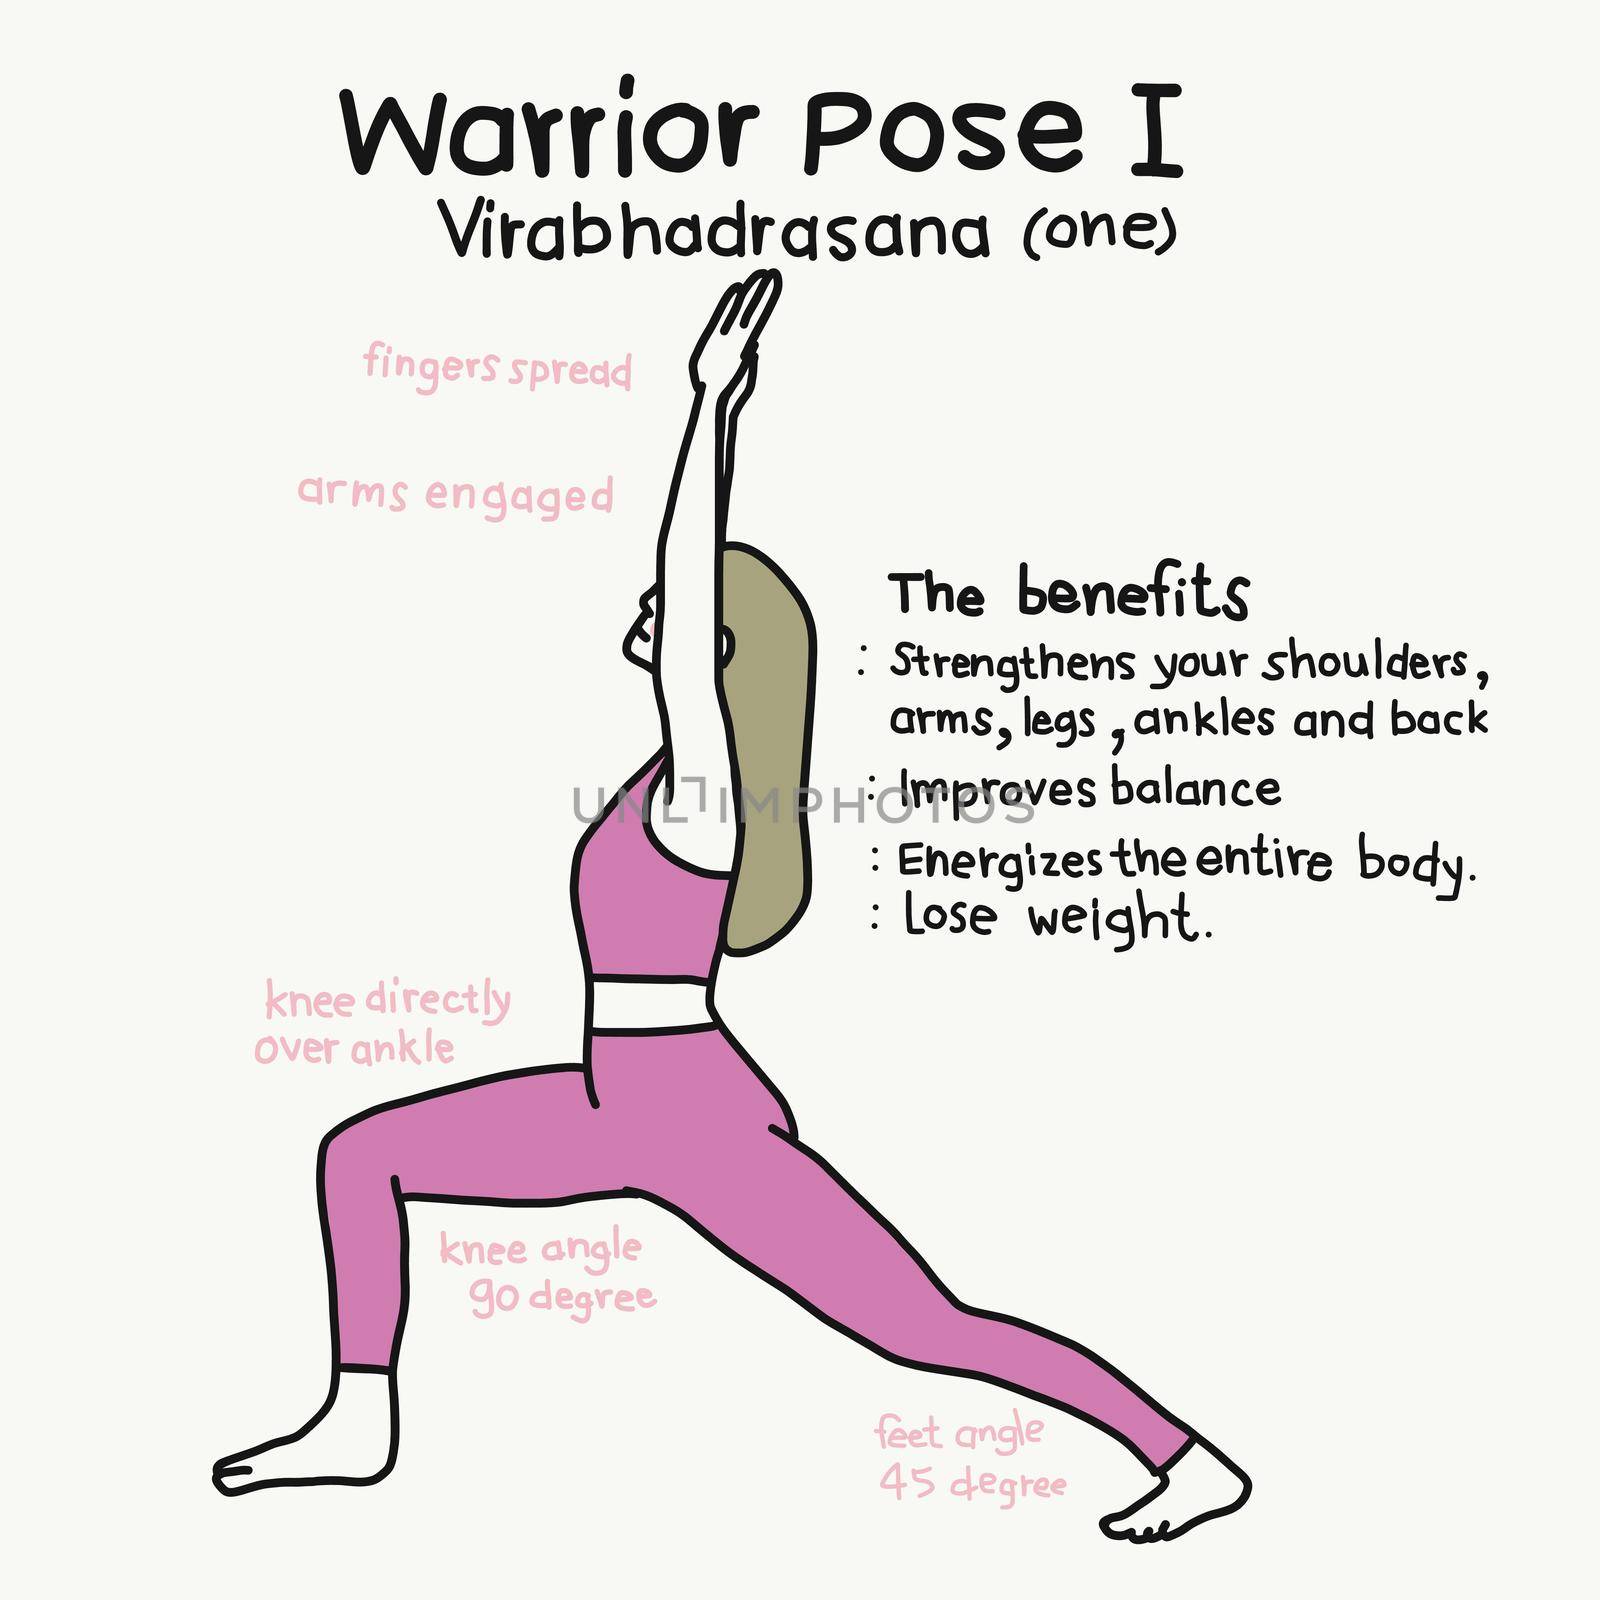 Warrior I yoga pose and benefits cartoon vector illustration by Yoopho